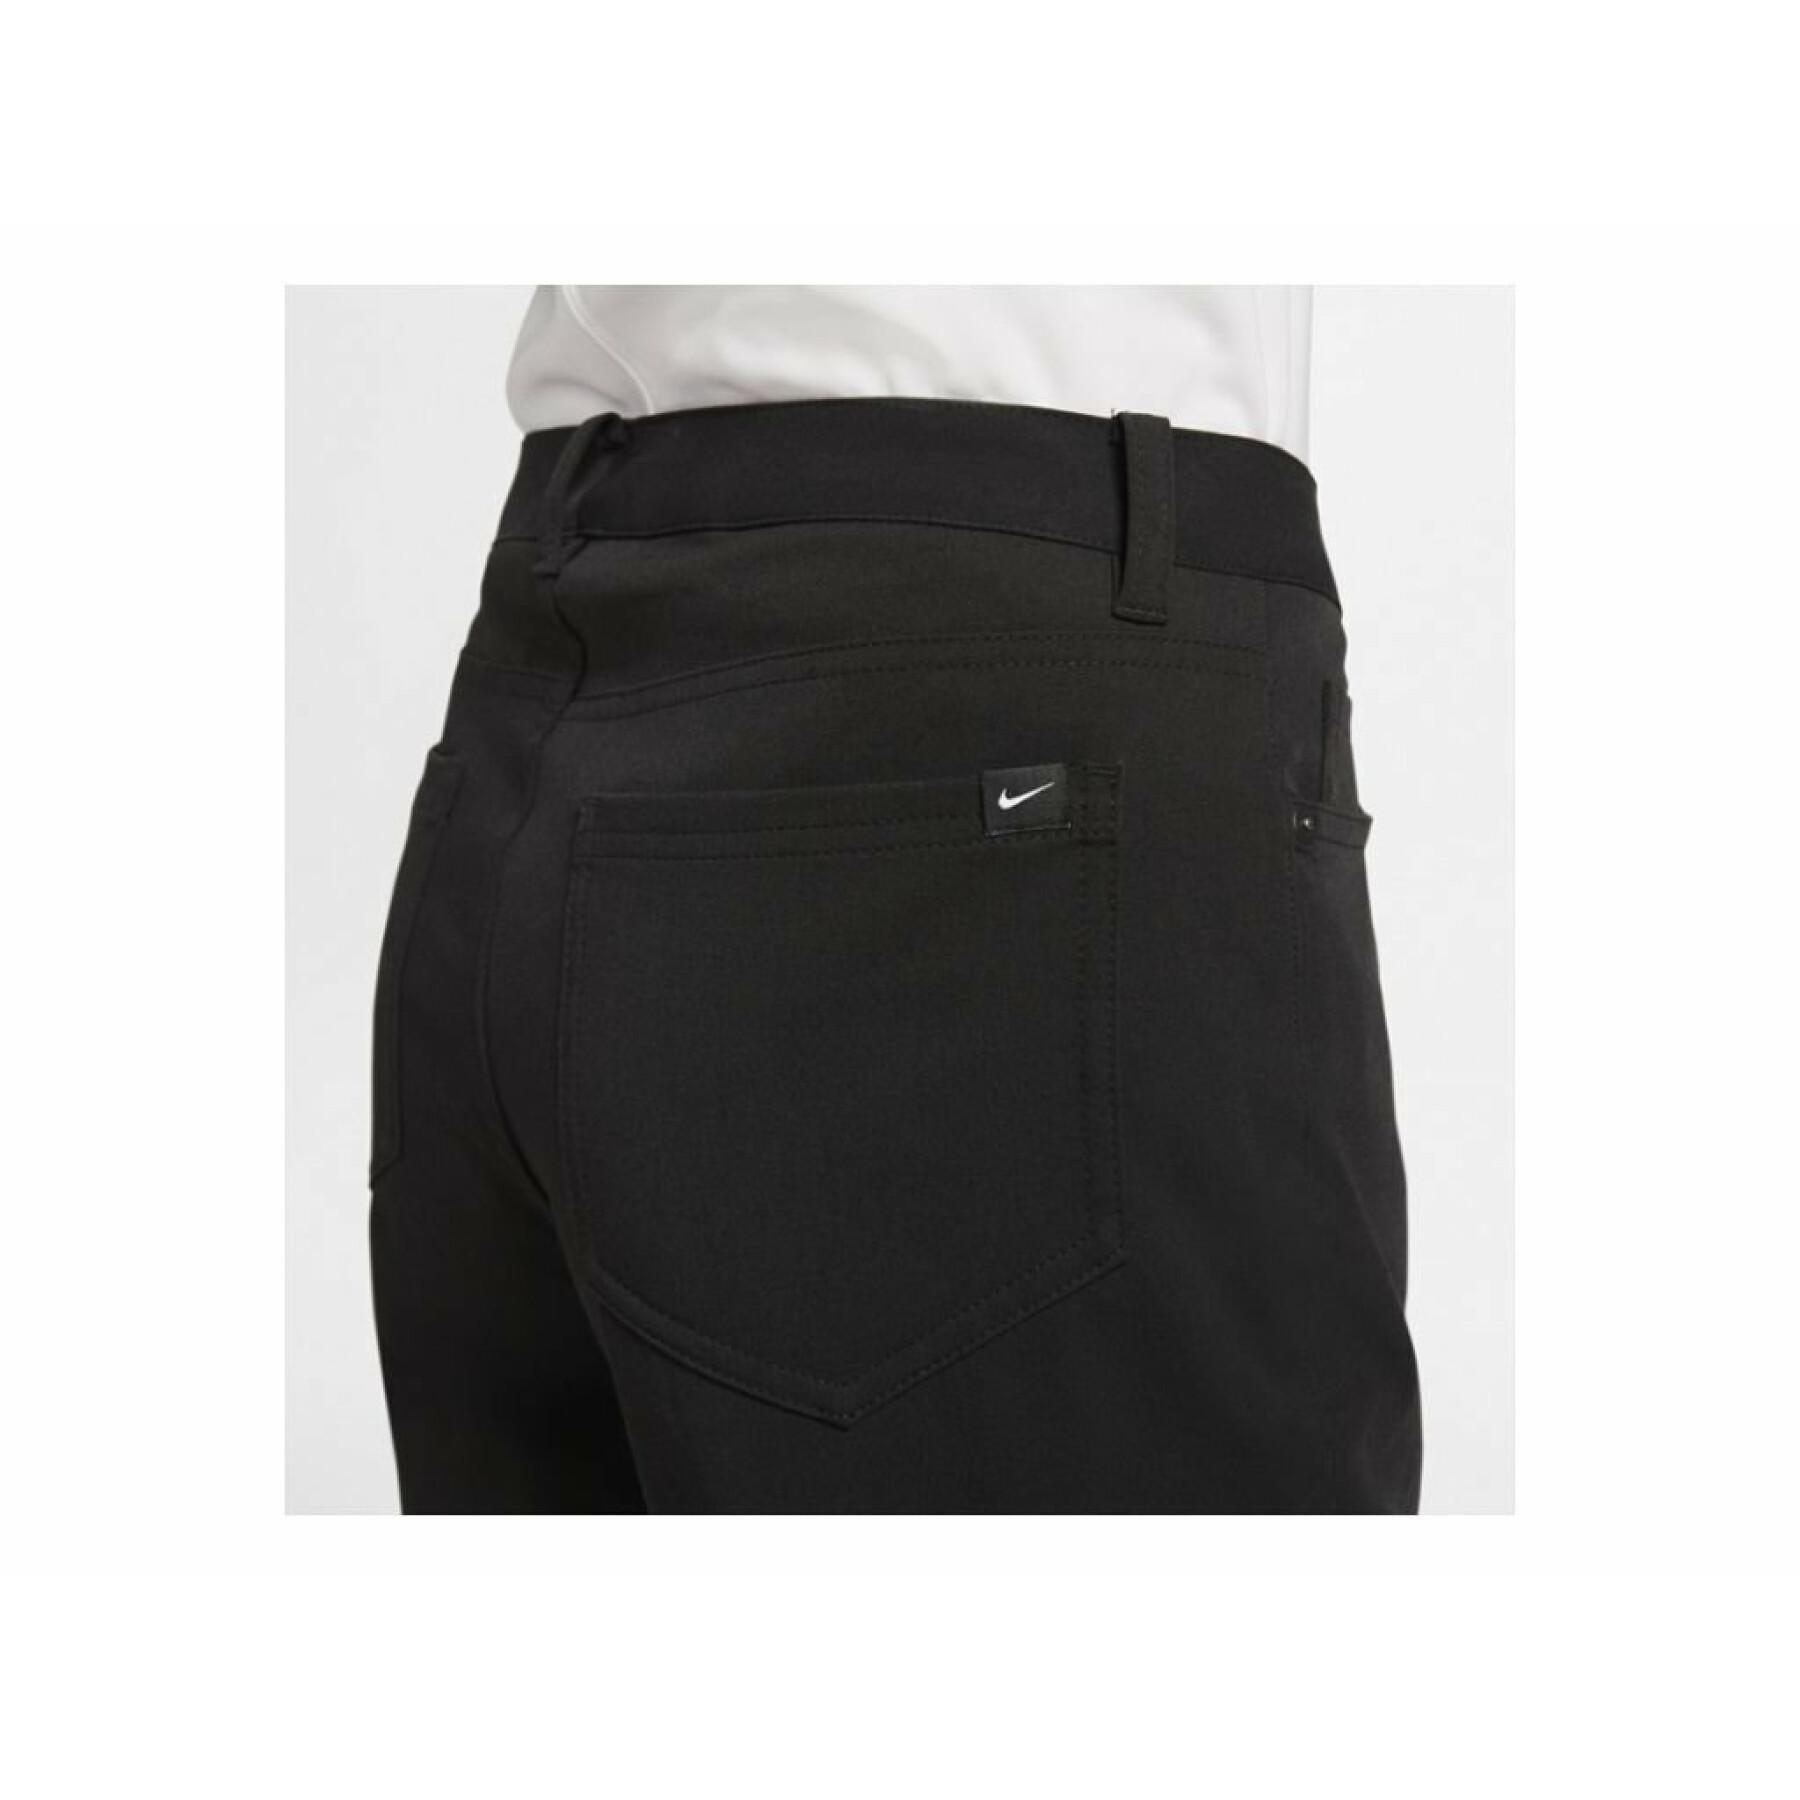 Women's golf pants Nike Slim Fit